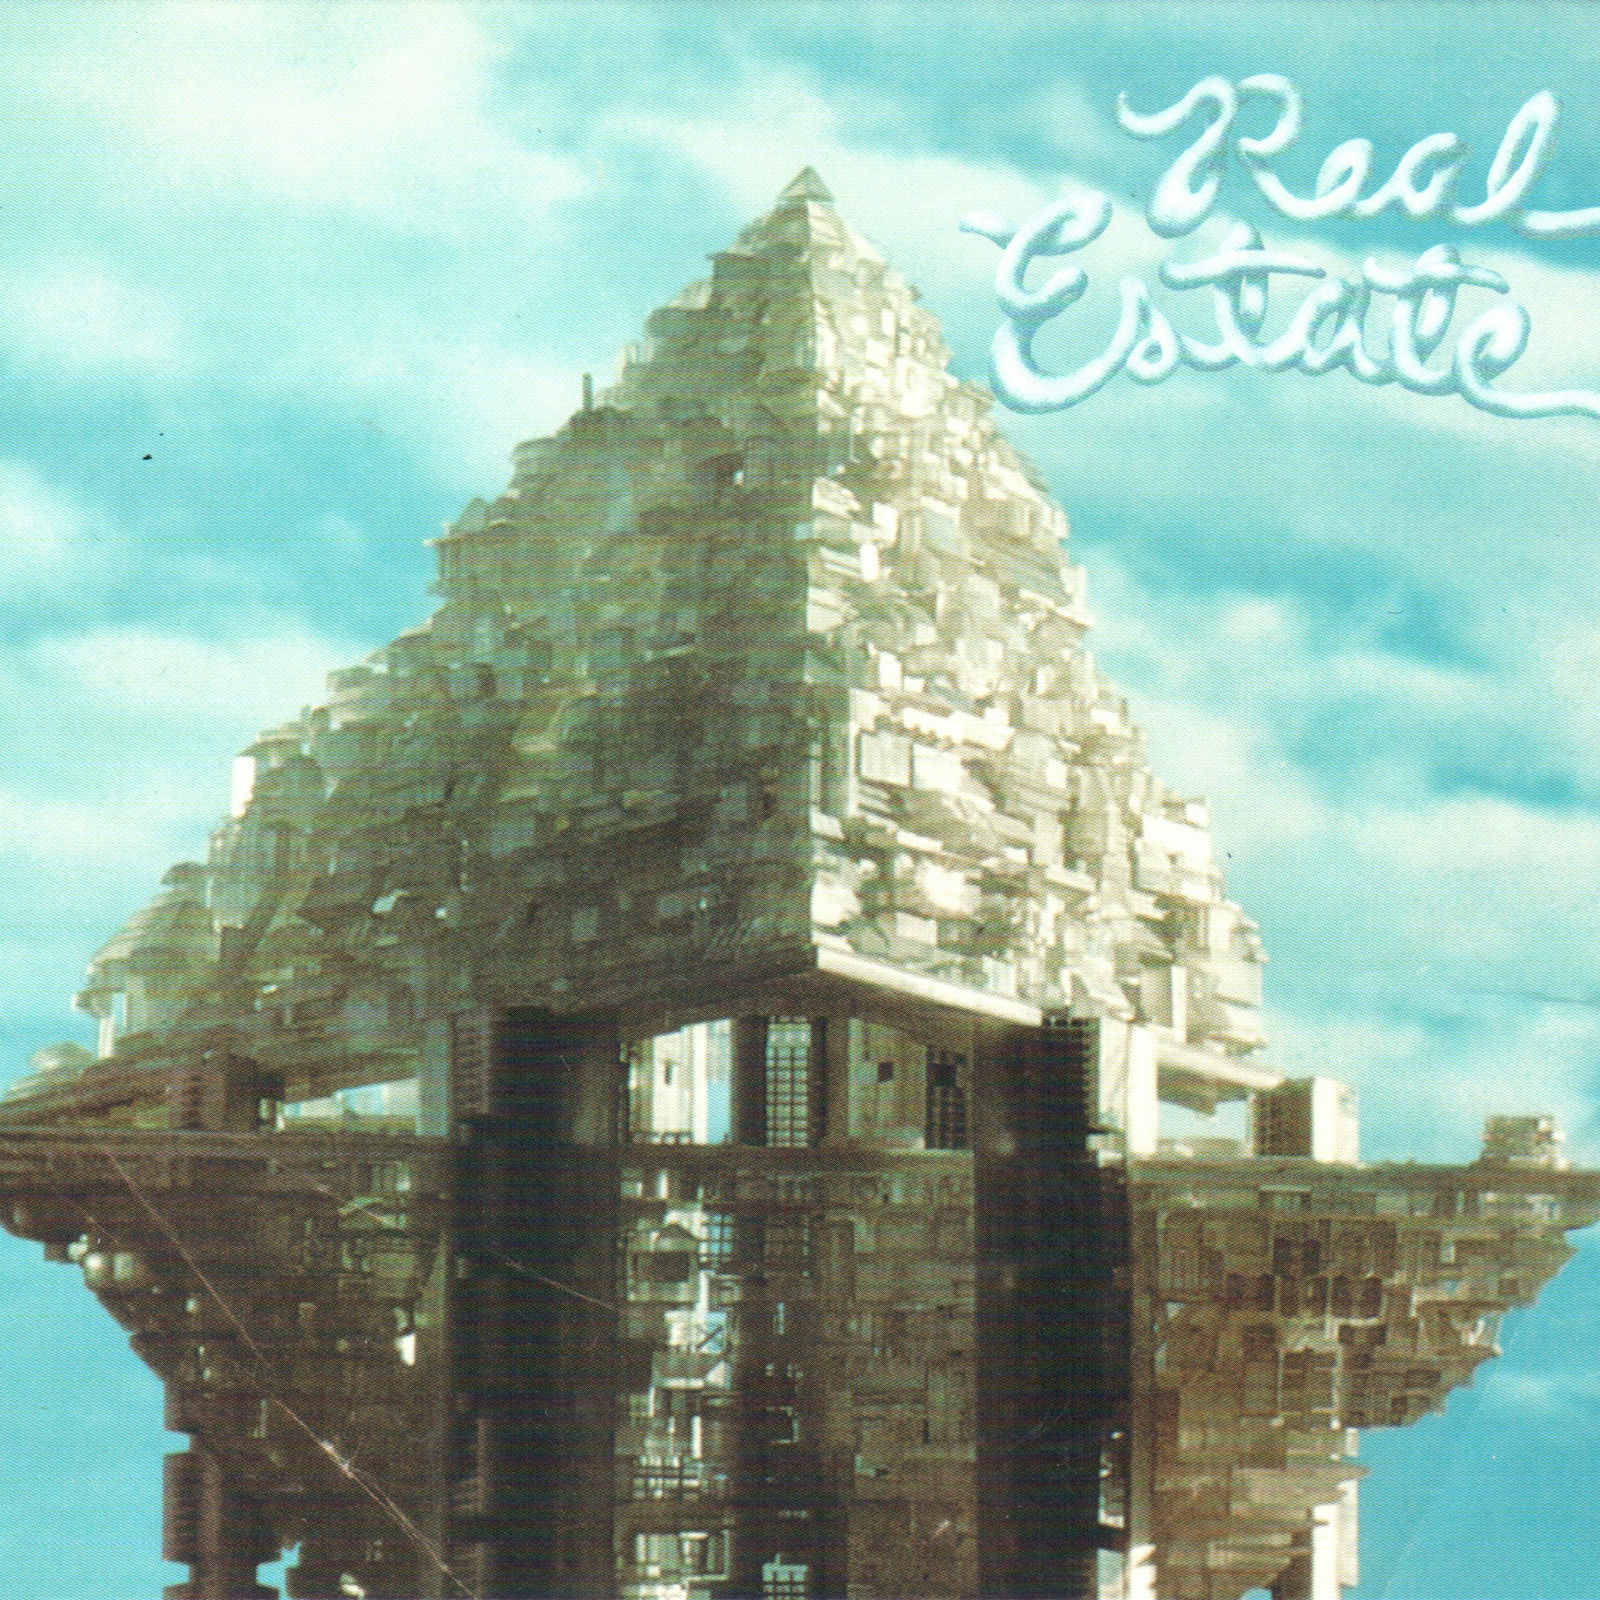 Album artwork for Album artwork for Real Estate by Real Estate by Real Estate - Real Estate